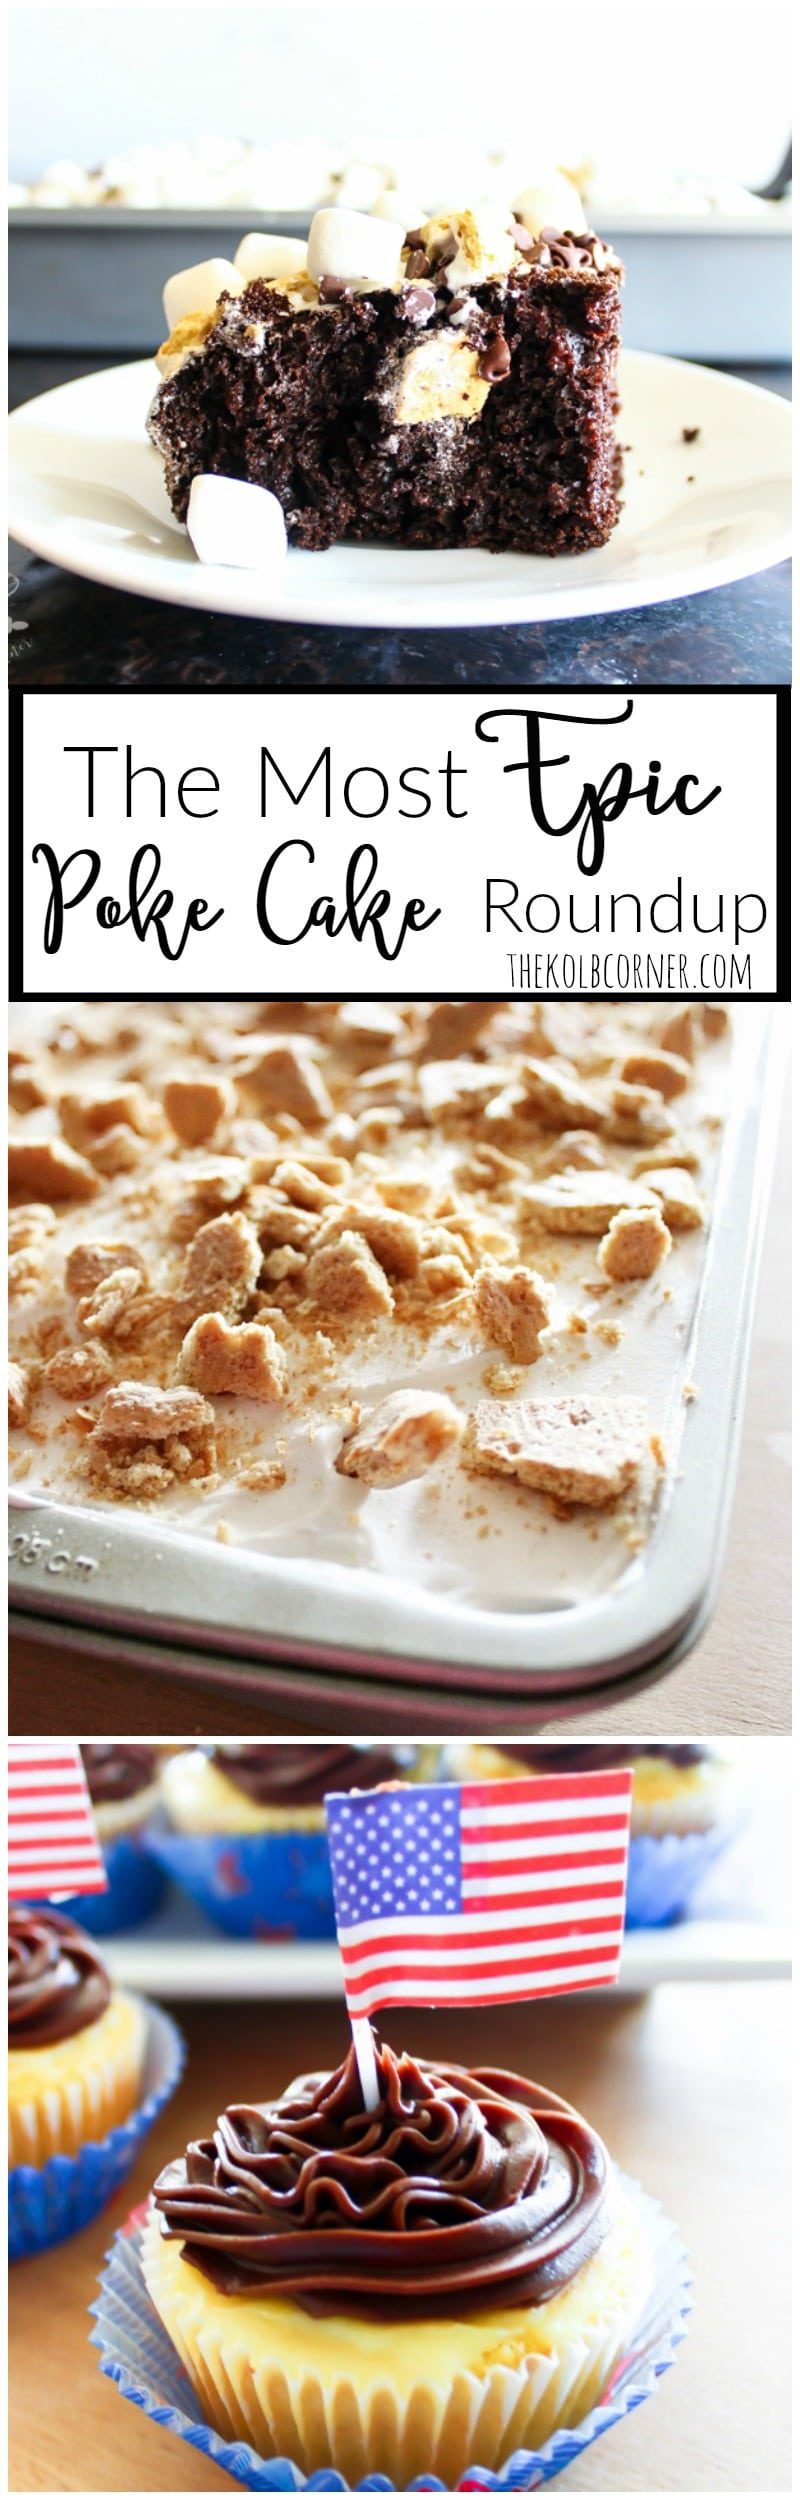 The Most Epic Poke Cake Roundup